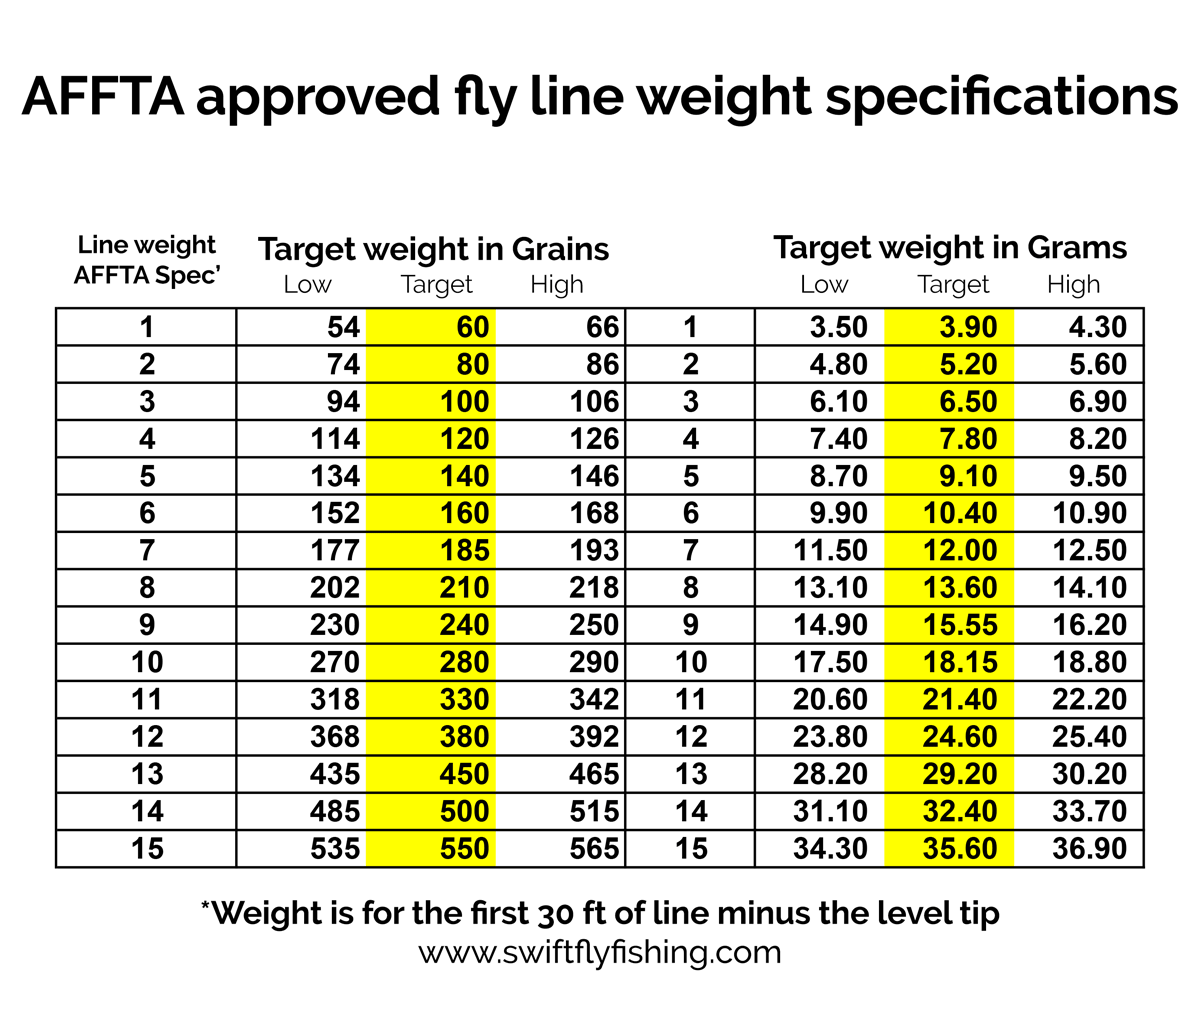 Aftma Line Weight Chart